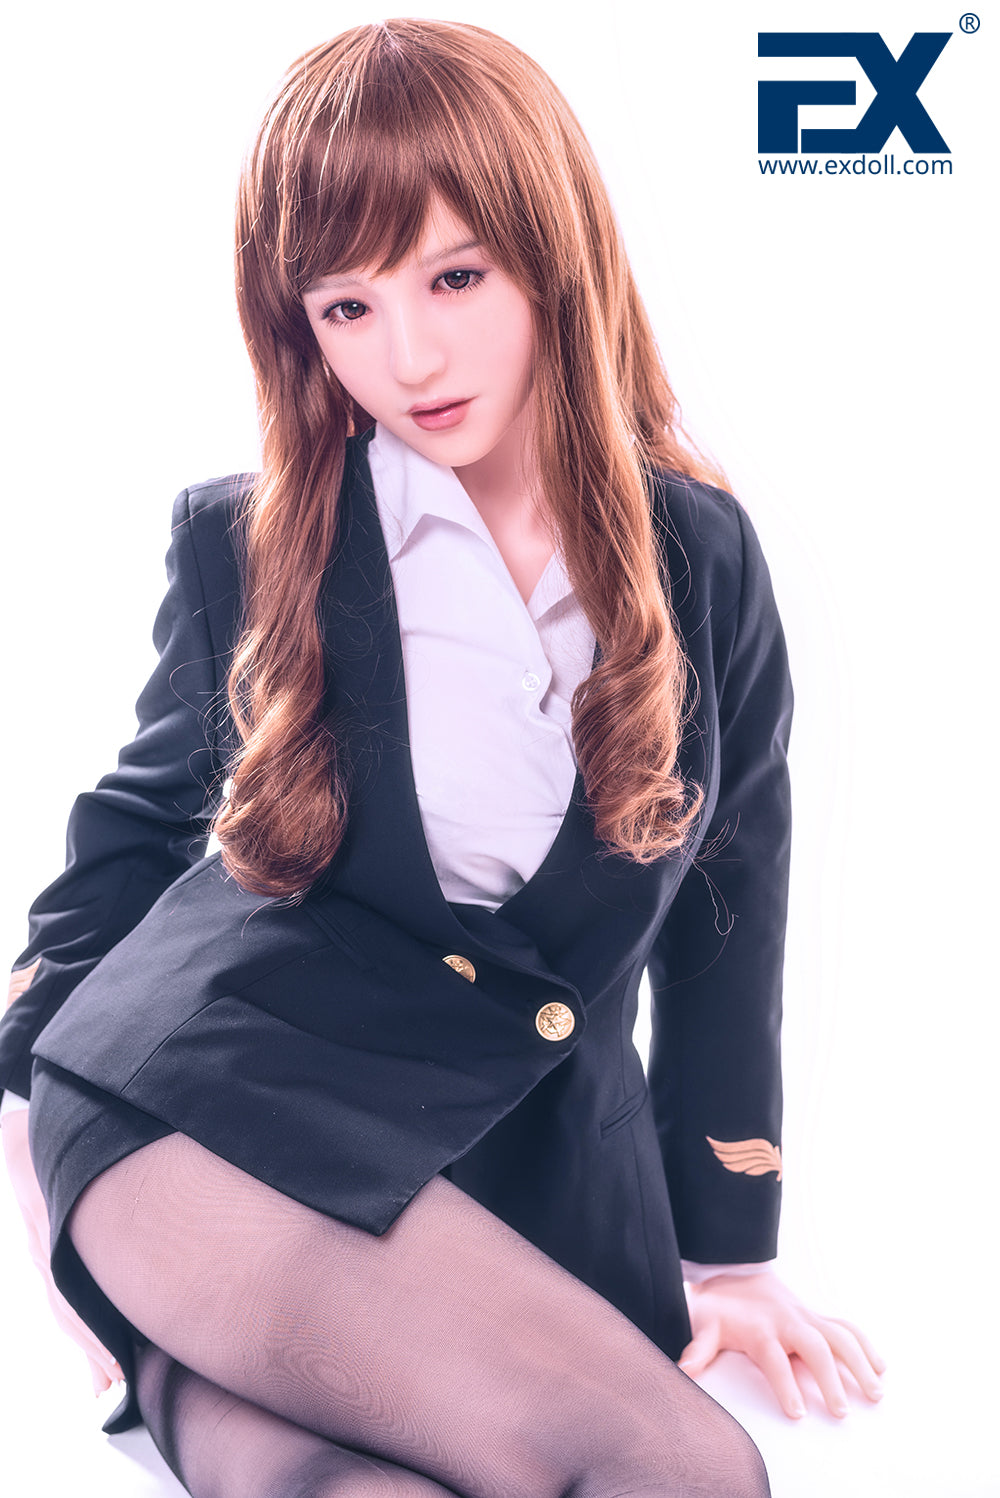 EX Doll Ukiyoe Series 170 cm Silicone - Yuan Yuan | Buy Sex Dolls at DOLLS ACTUALLY